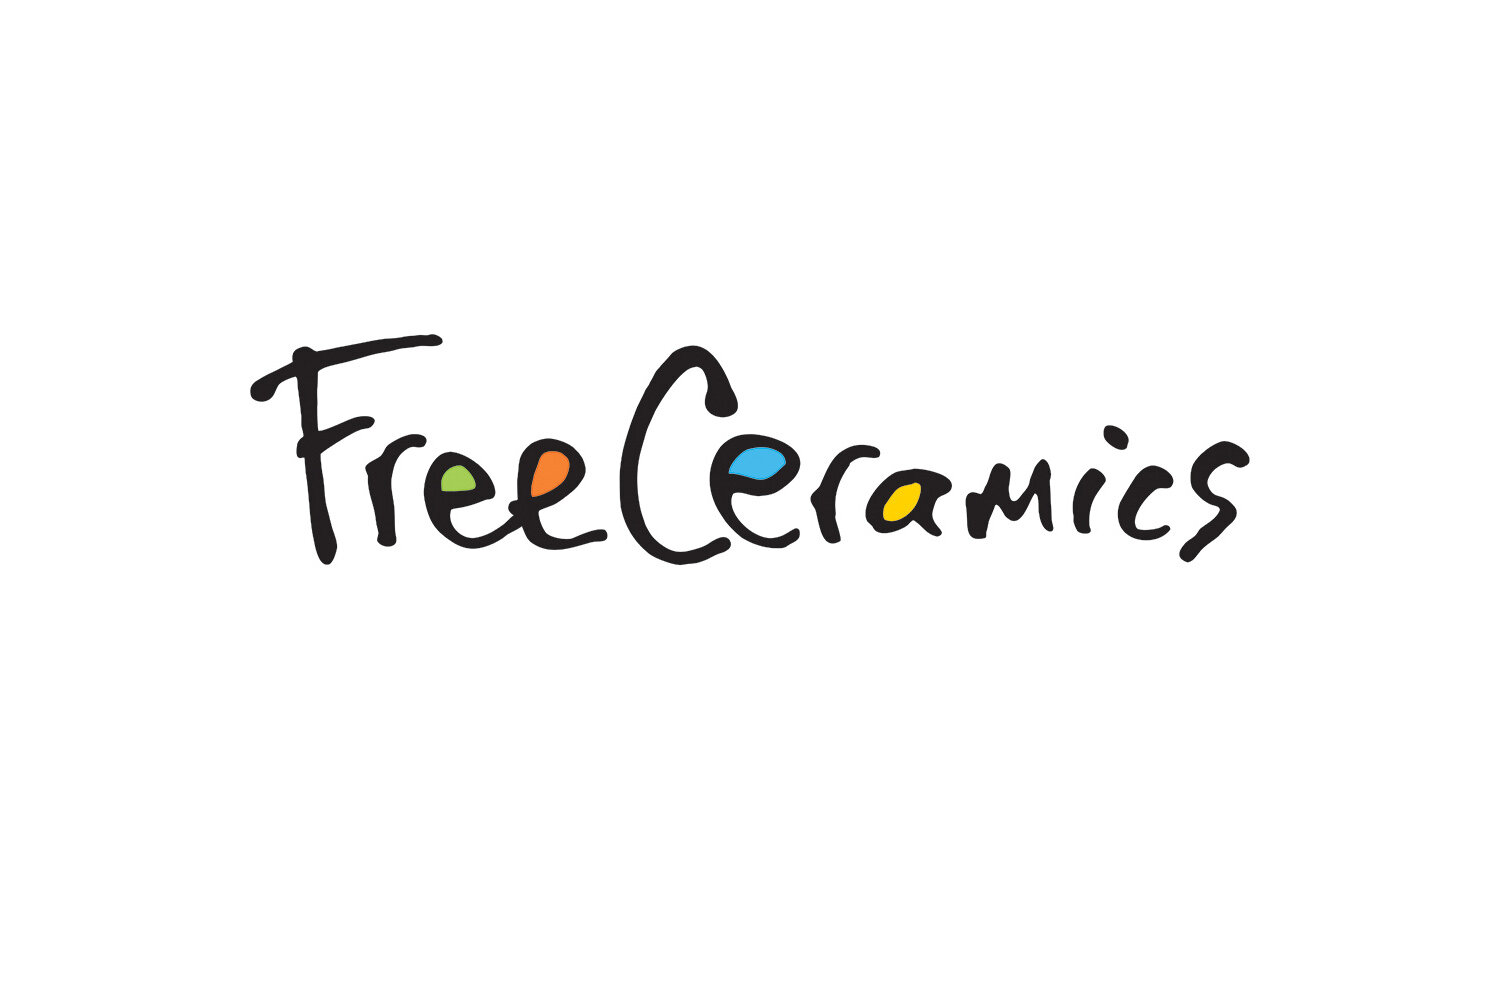 FreeCeramics_logo.jpg